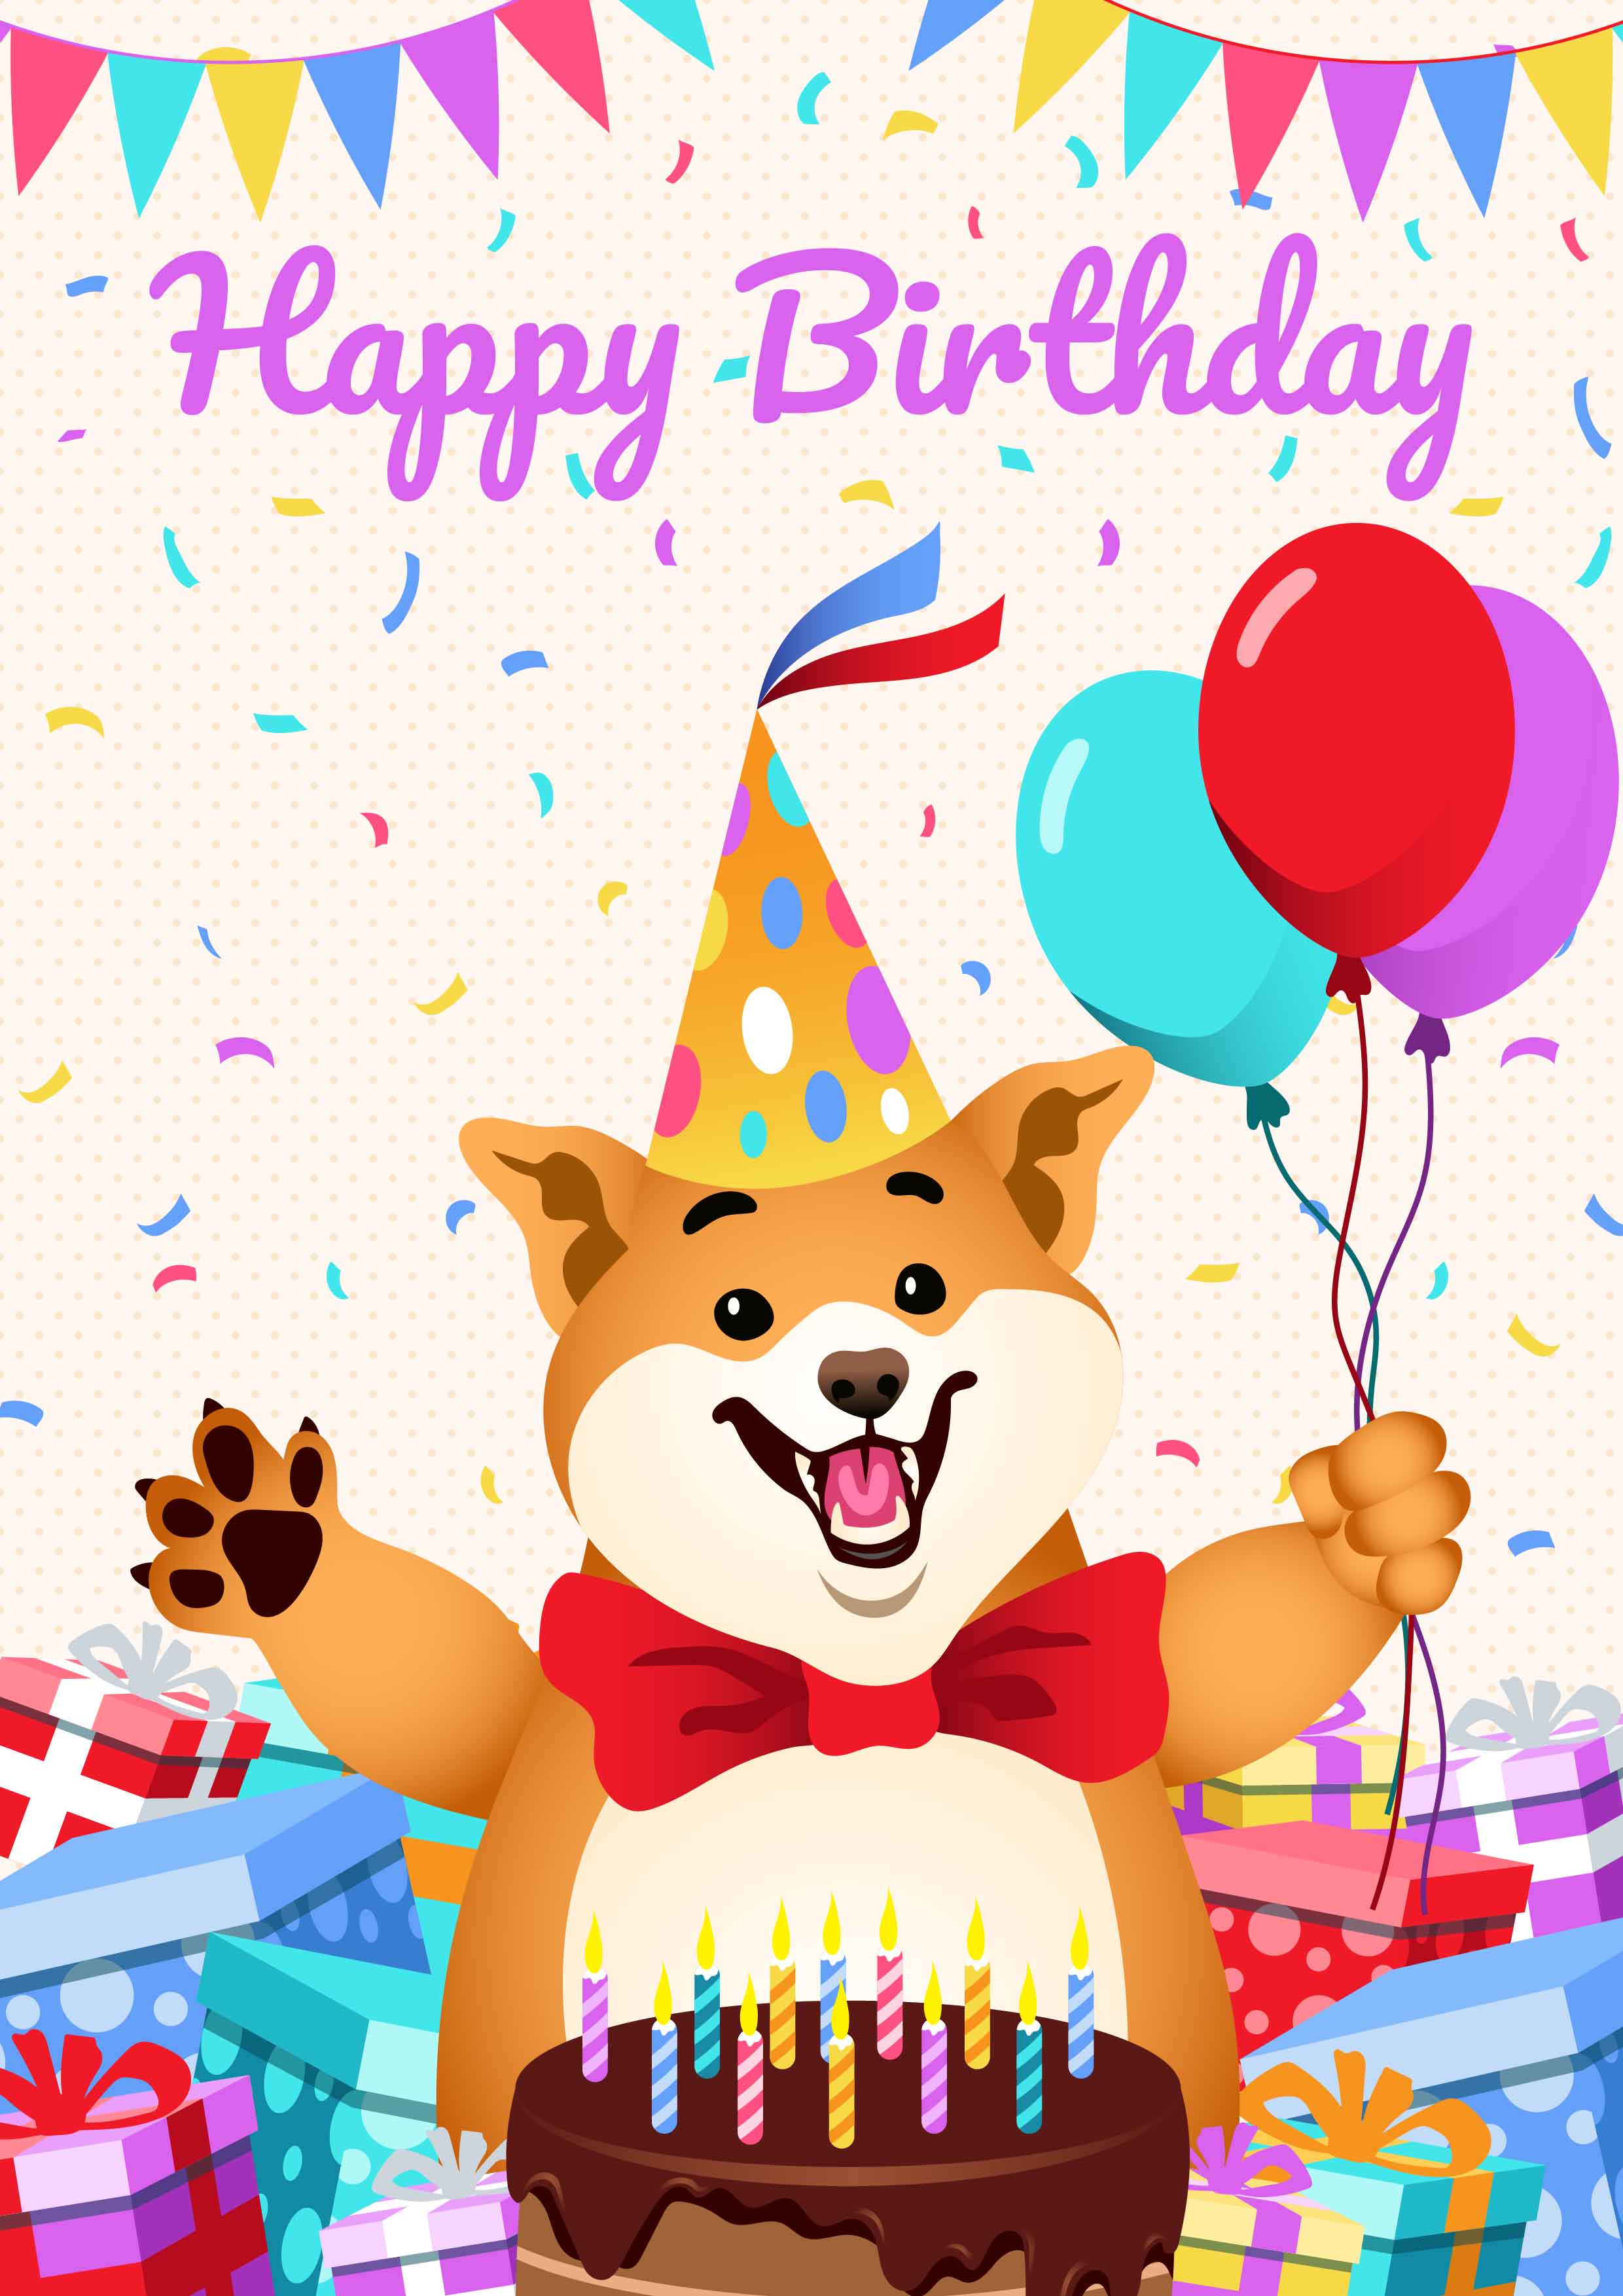 Download Happy Birthday Animals - Download Free Vectors, Clipart ...